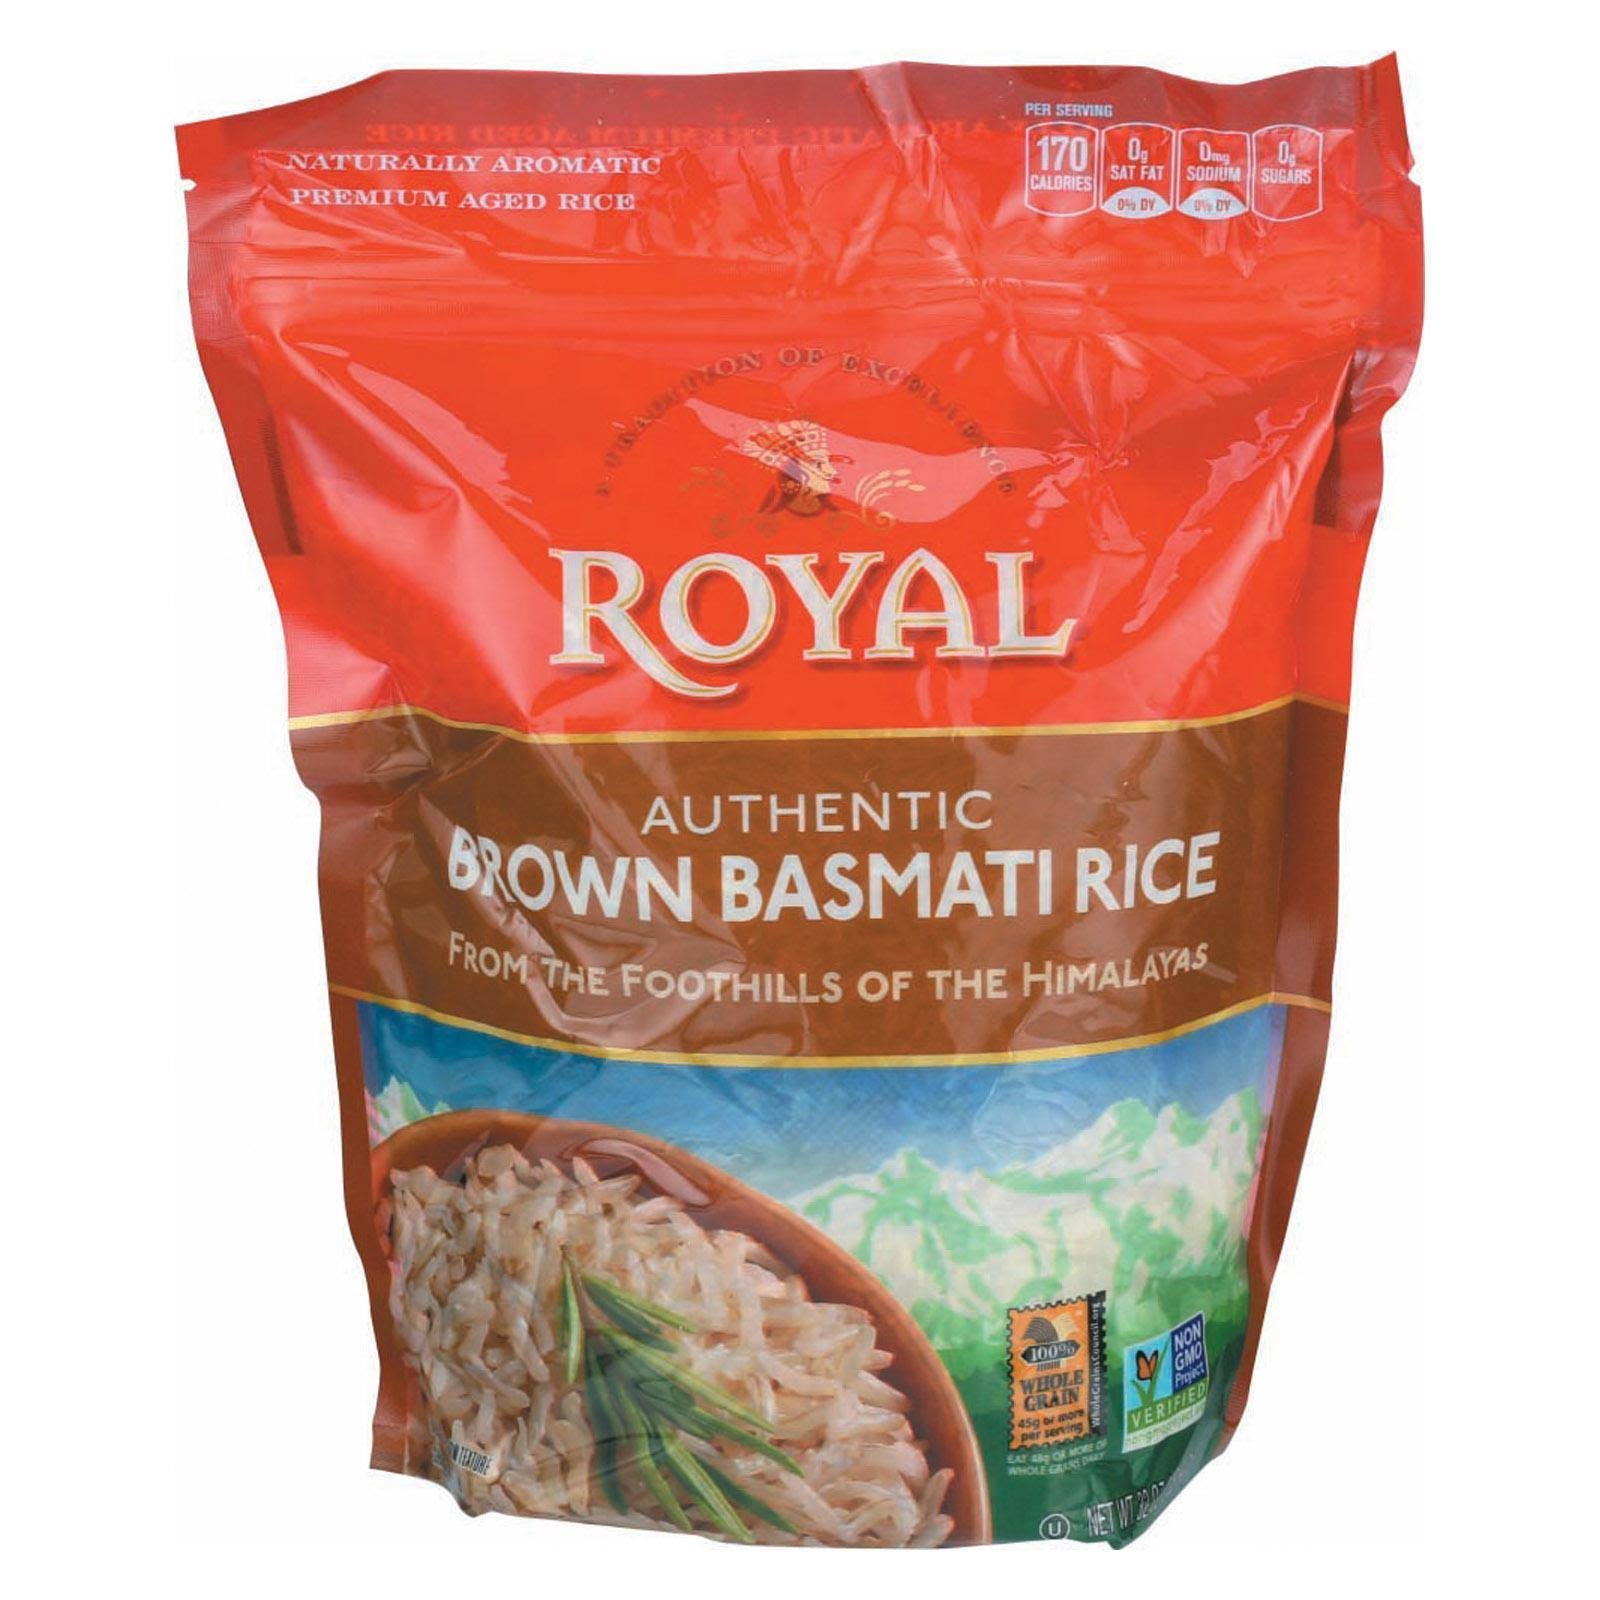 Royal Brown Basmati Rice - 2lbs